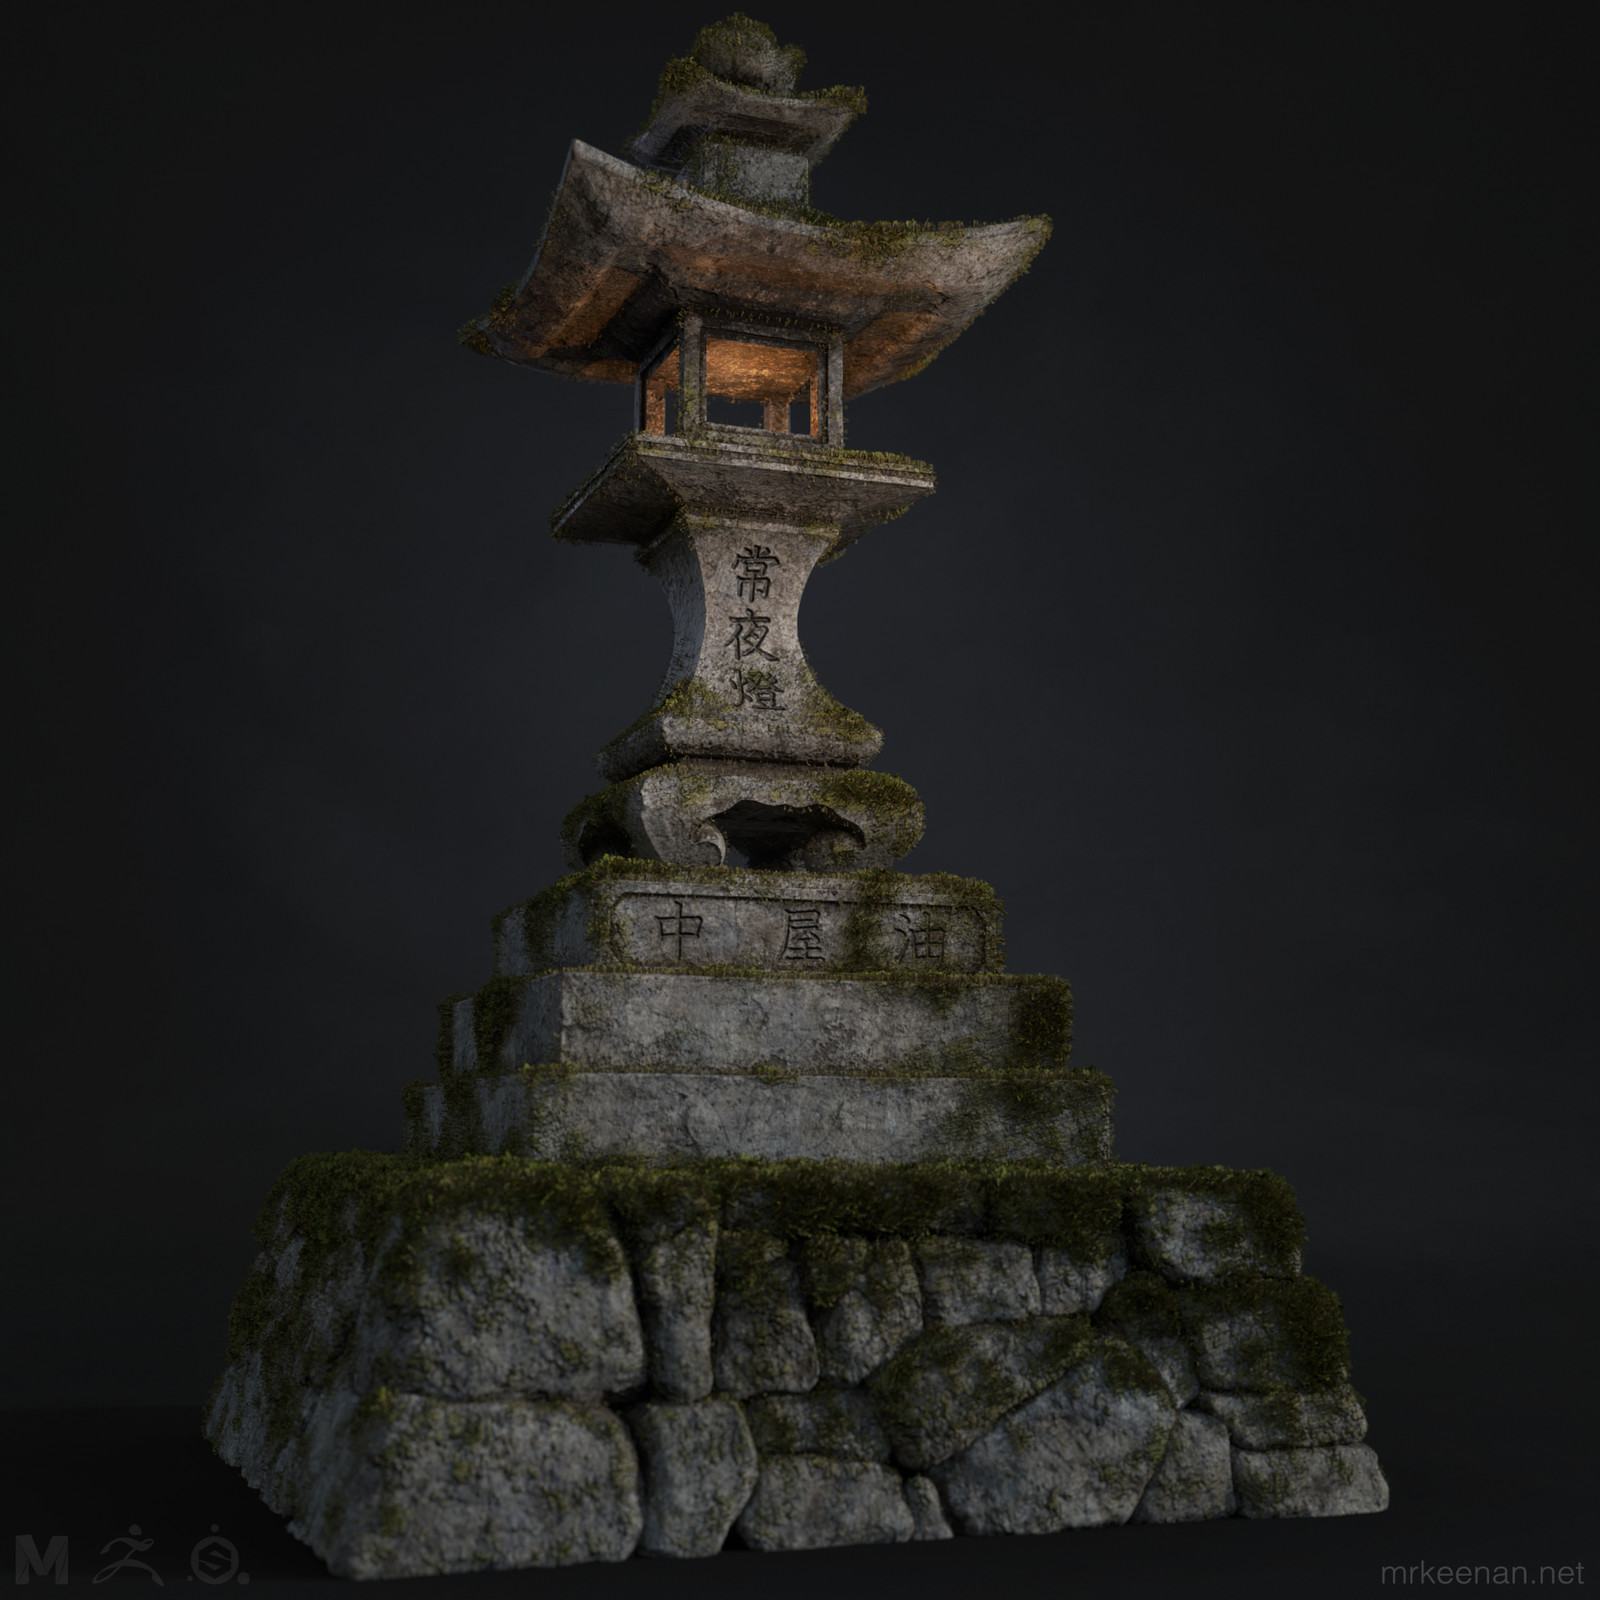 Tōrō - stone lantern